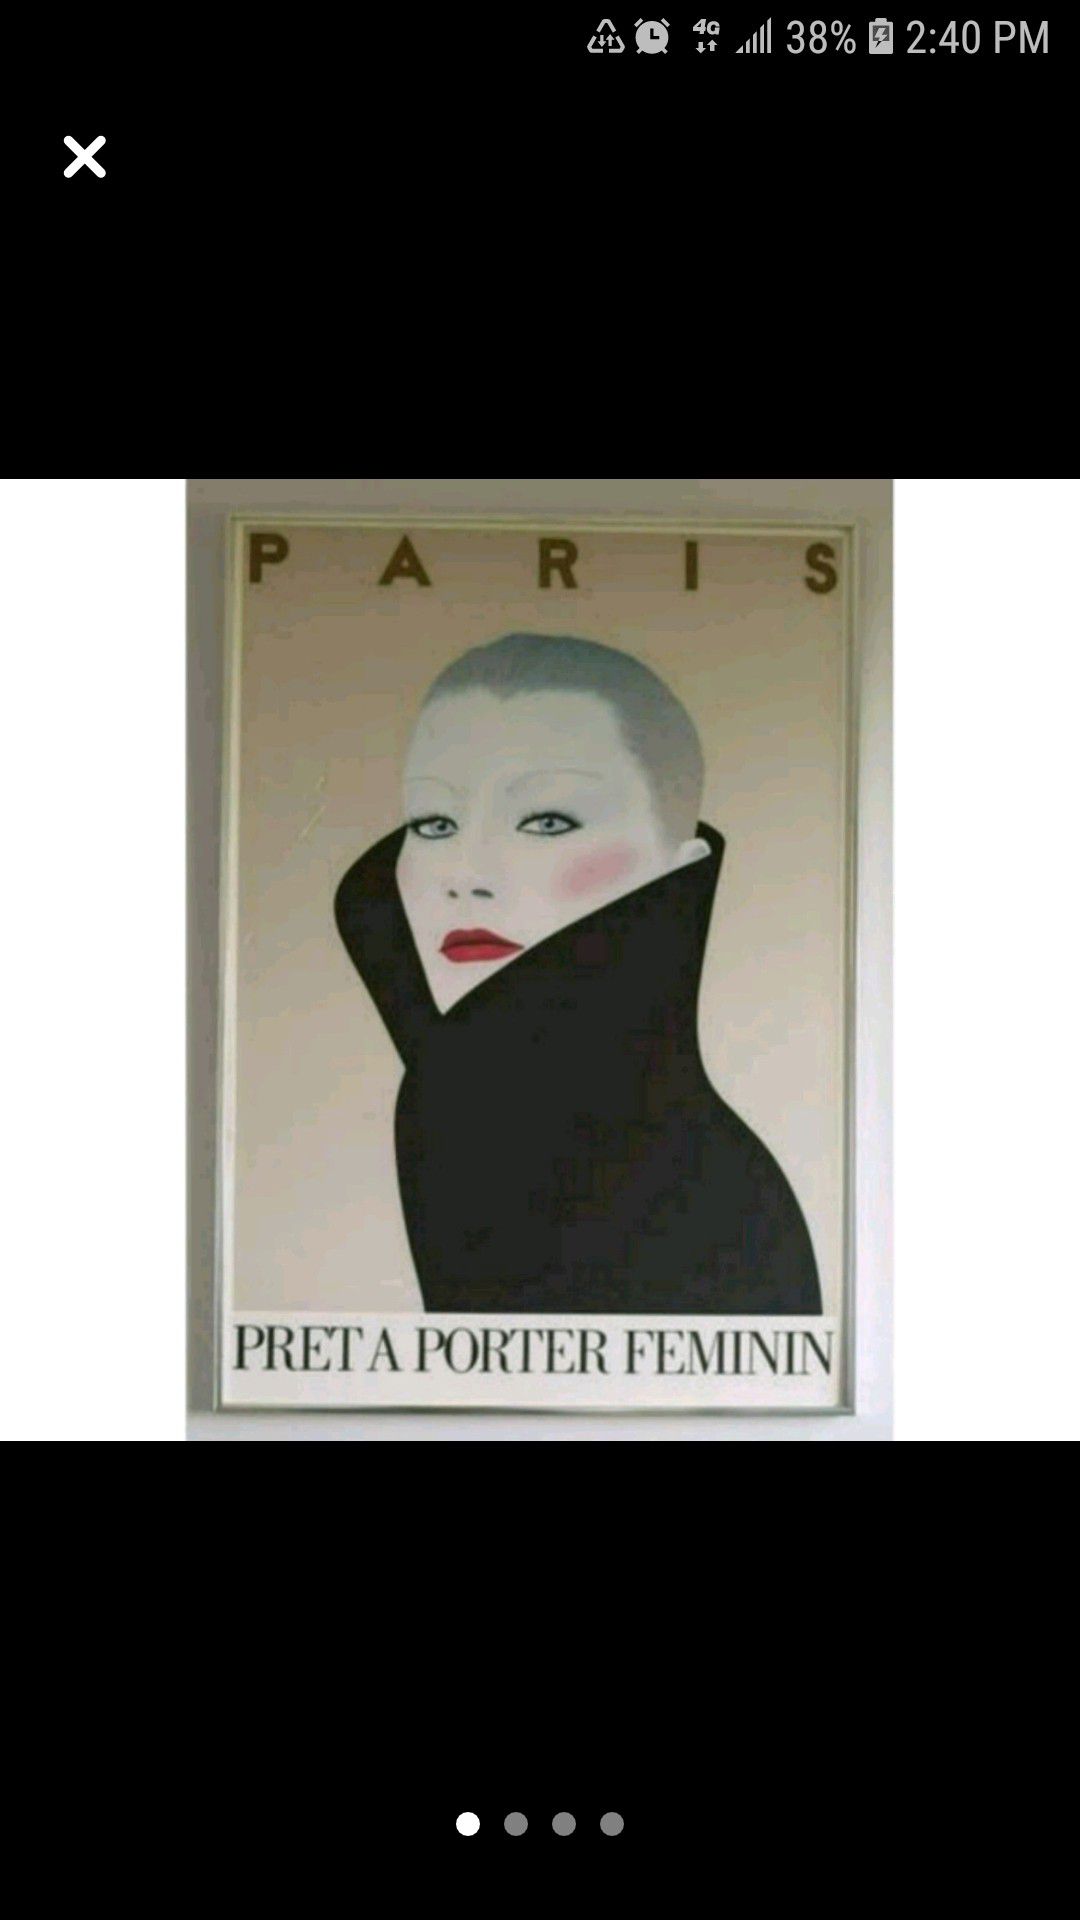 Vintage French fashion poster, "Pret A Porter Feminin"